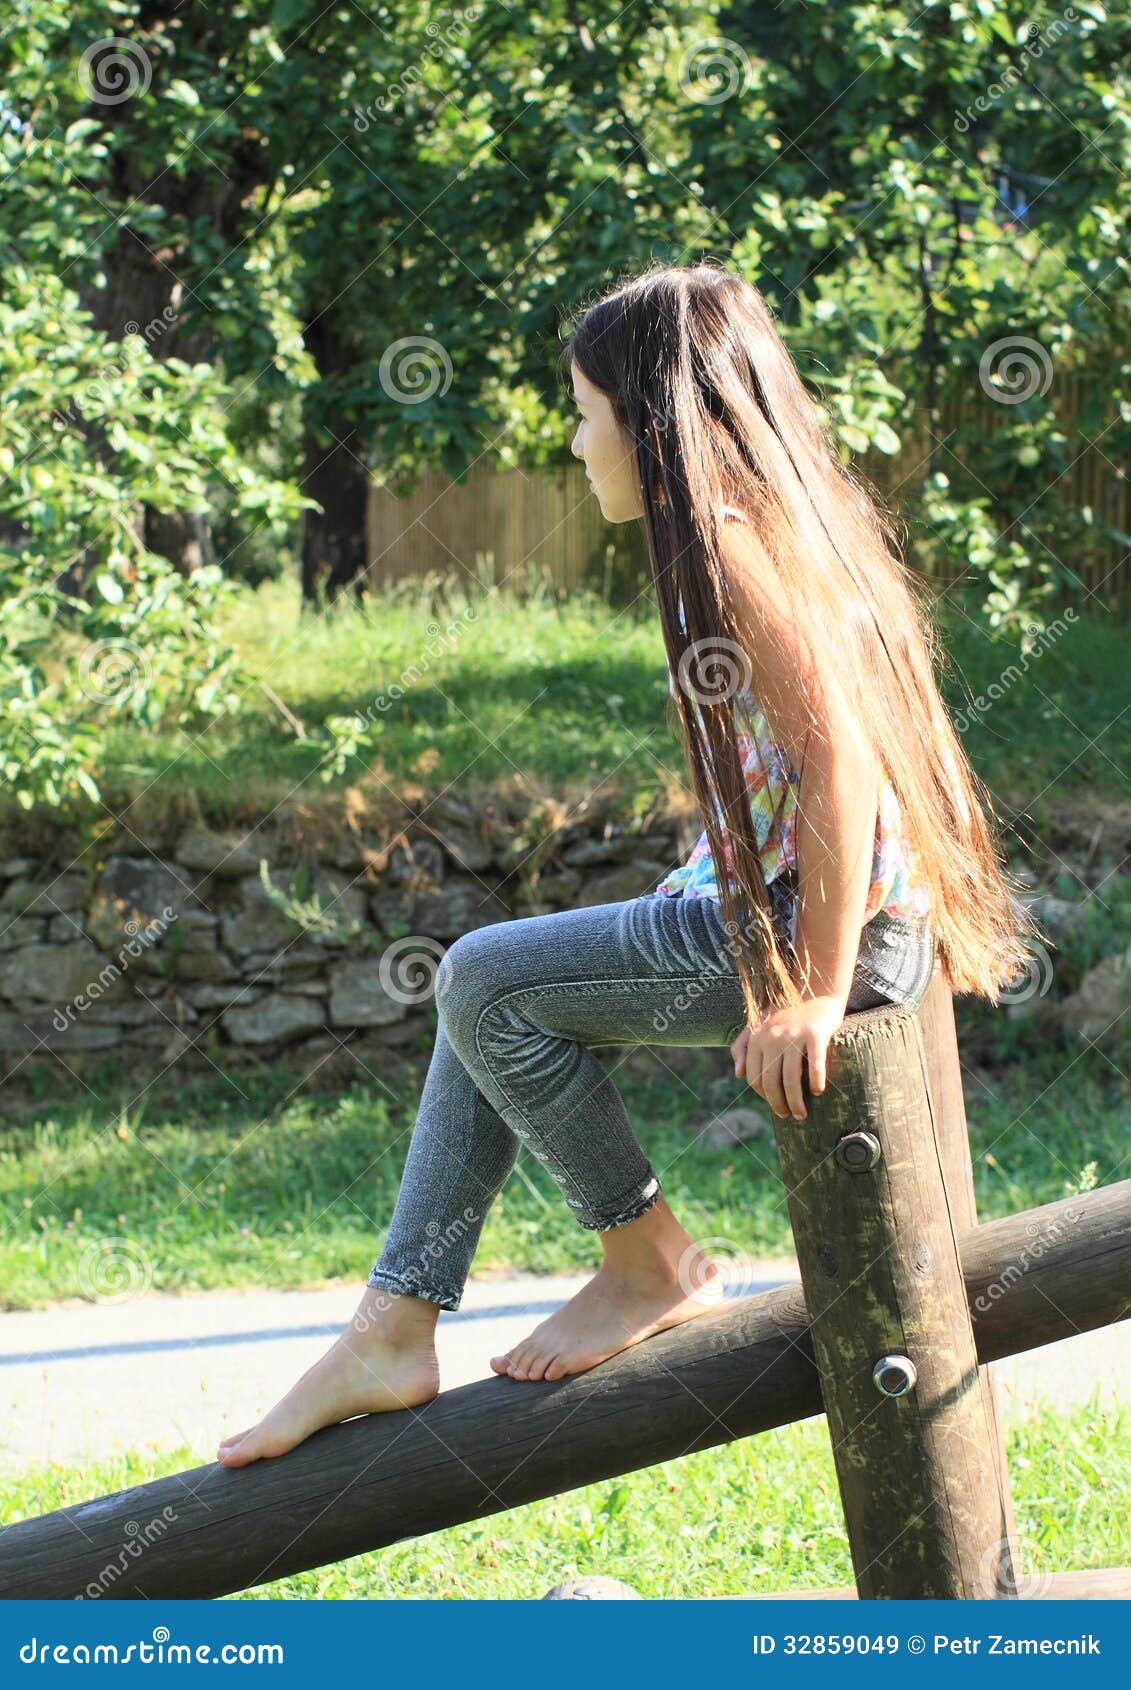 https://thumbs.dreamstime.com/z/girl-sitting-wooden-construction-barefoot-grey-pants-swing-32859049.jpg